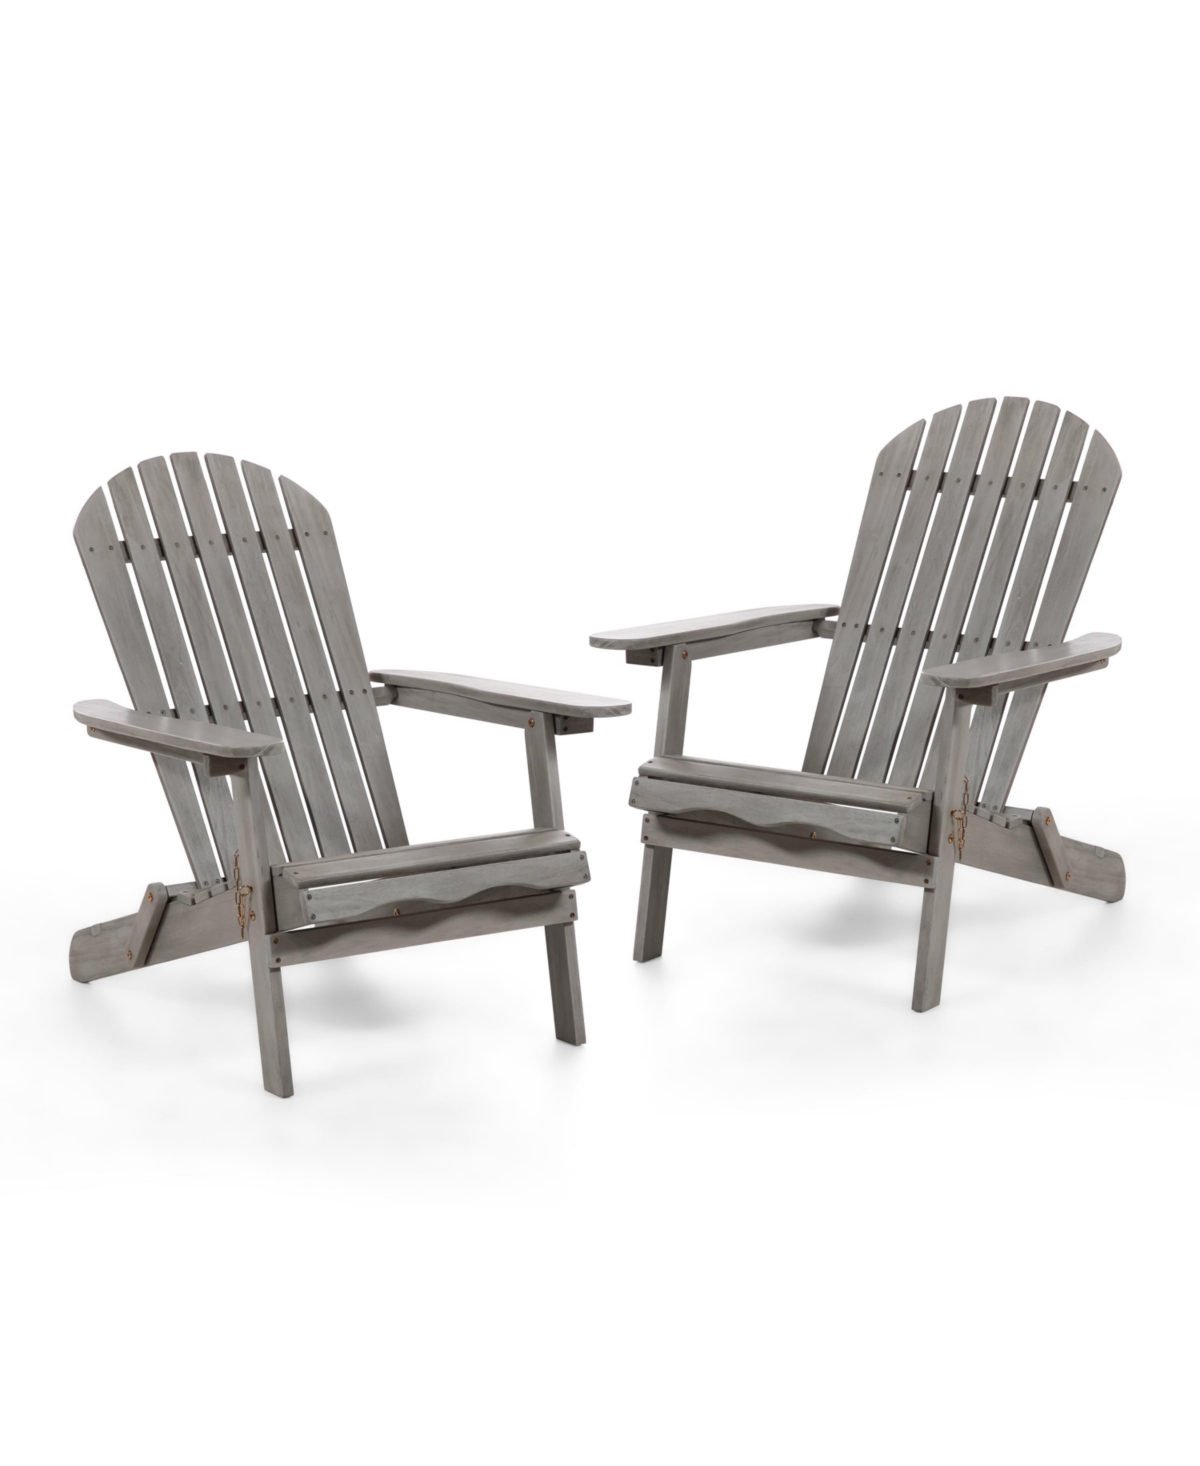 Furniture Of America 2 Piece Outdoor Eucalyptus Wood Folding Adirondrack Chairs In Gray